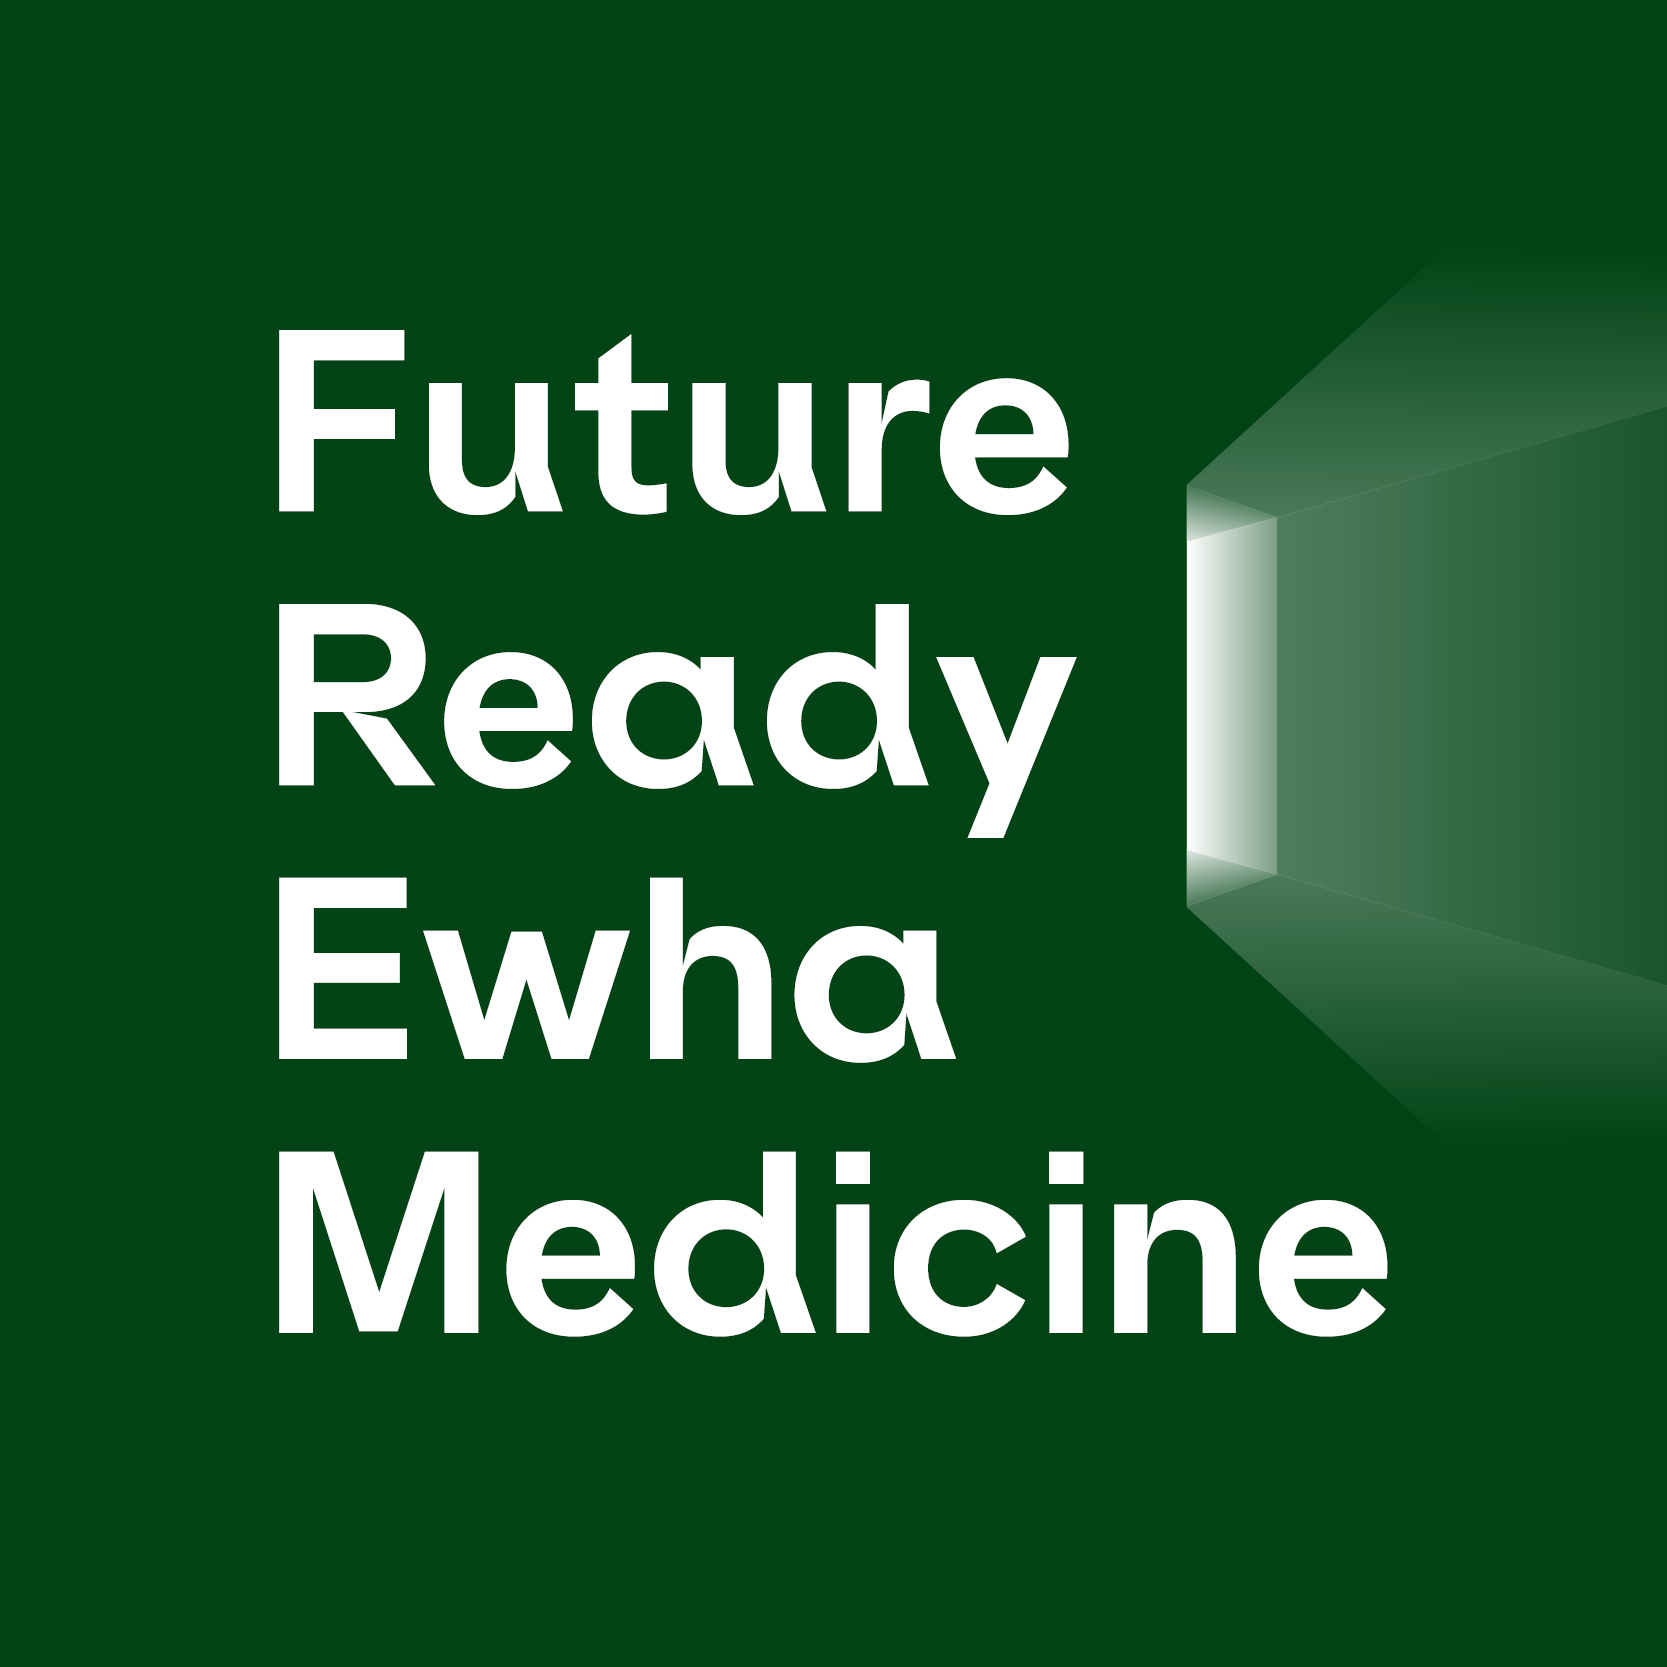 Future Ready, Ewha Medicine